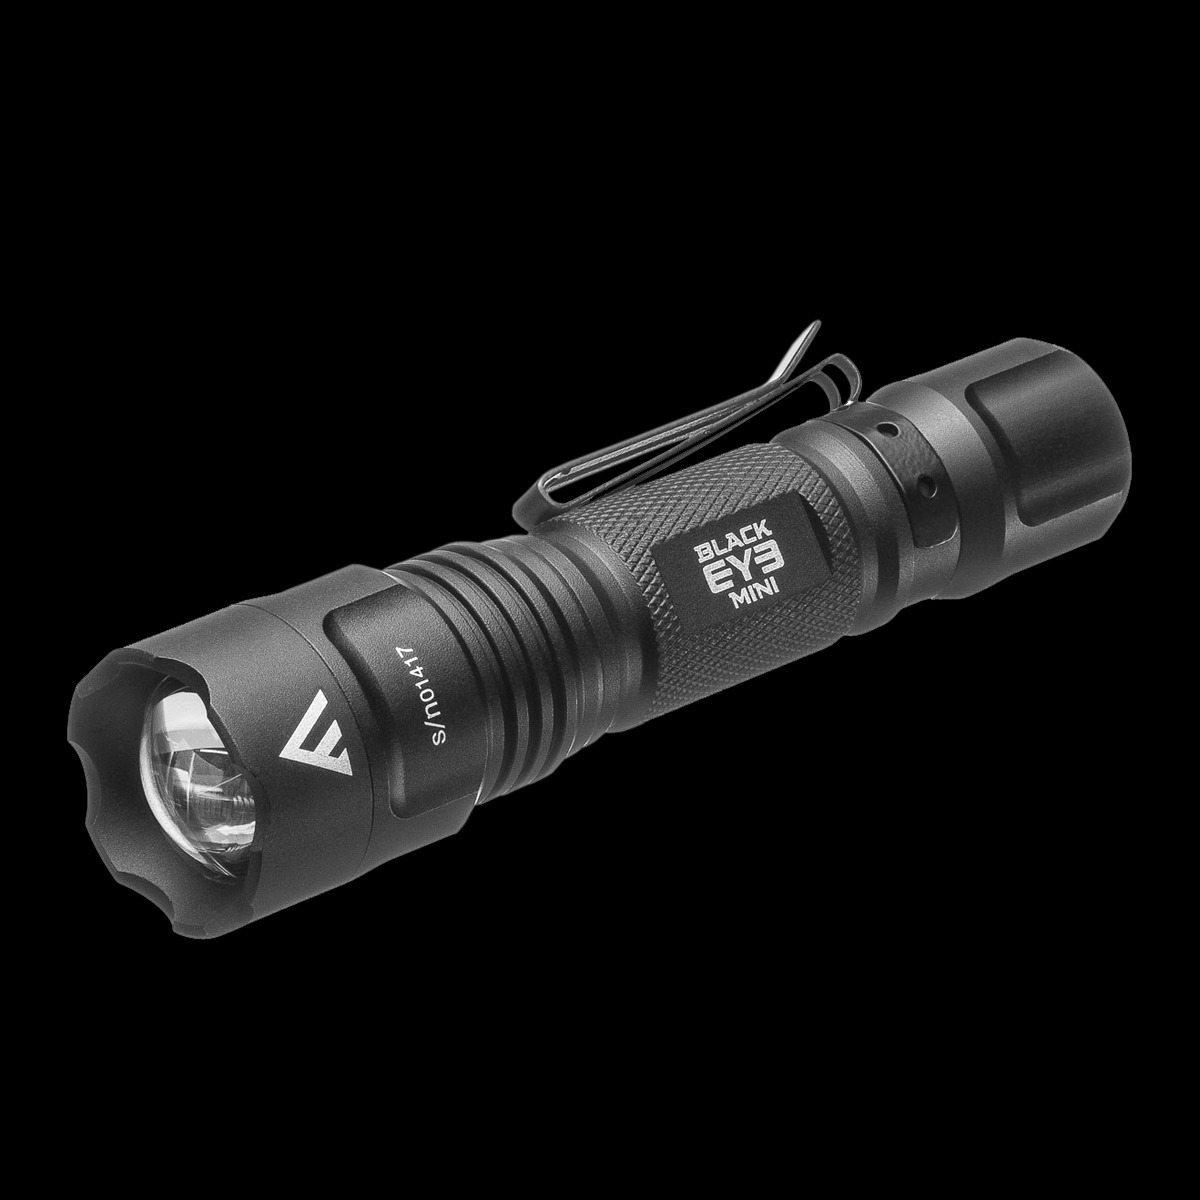 BLACK EYE MINI® handheld flashlight, 135 lm